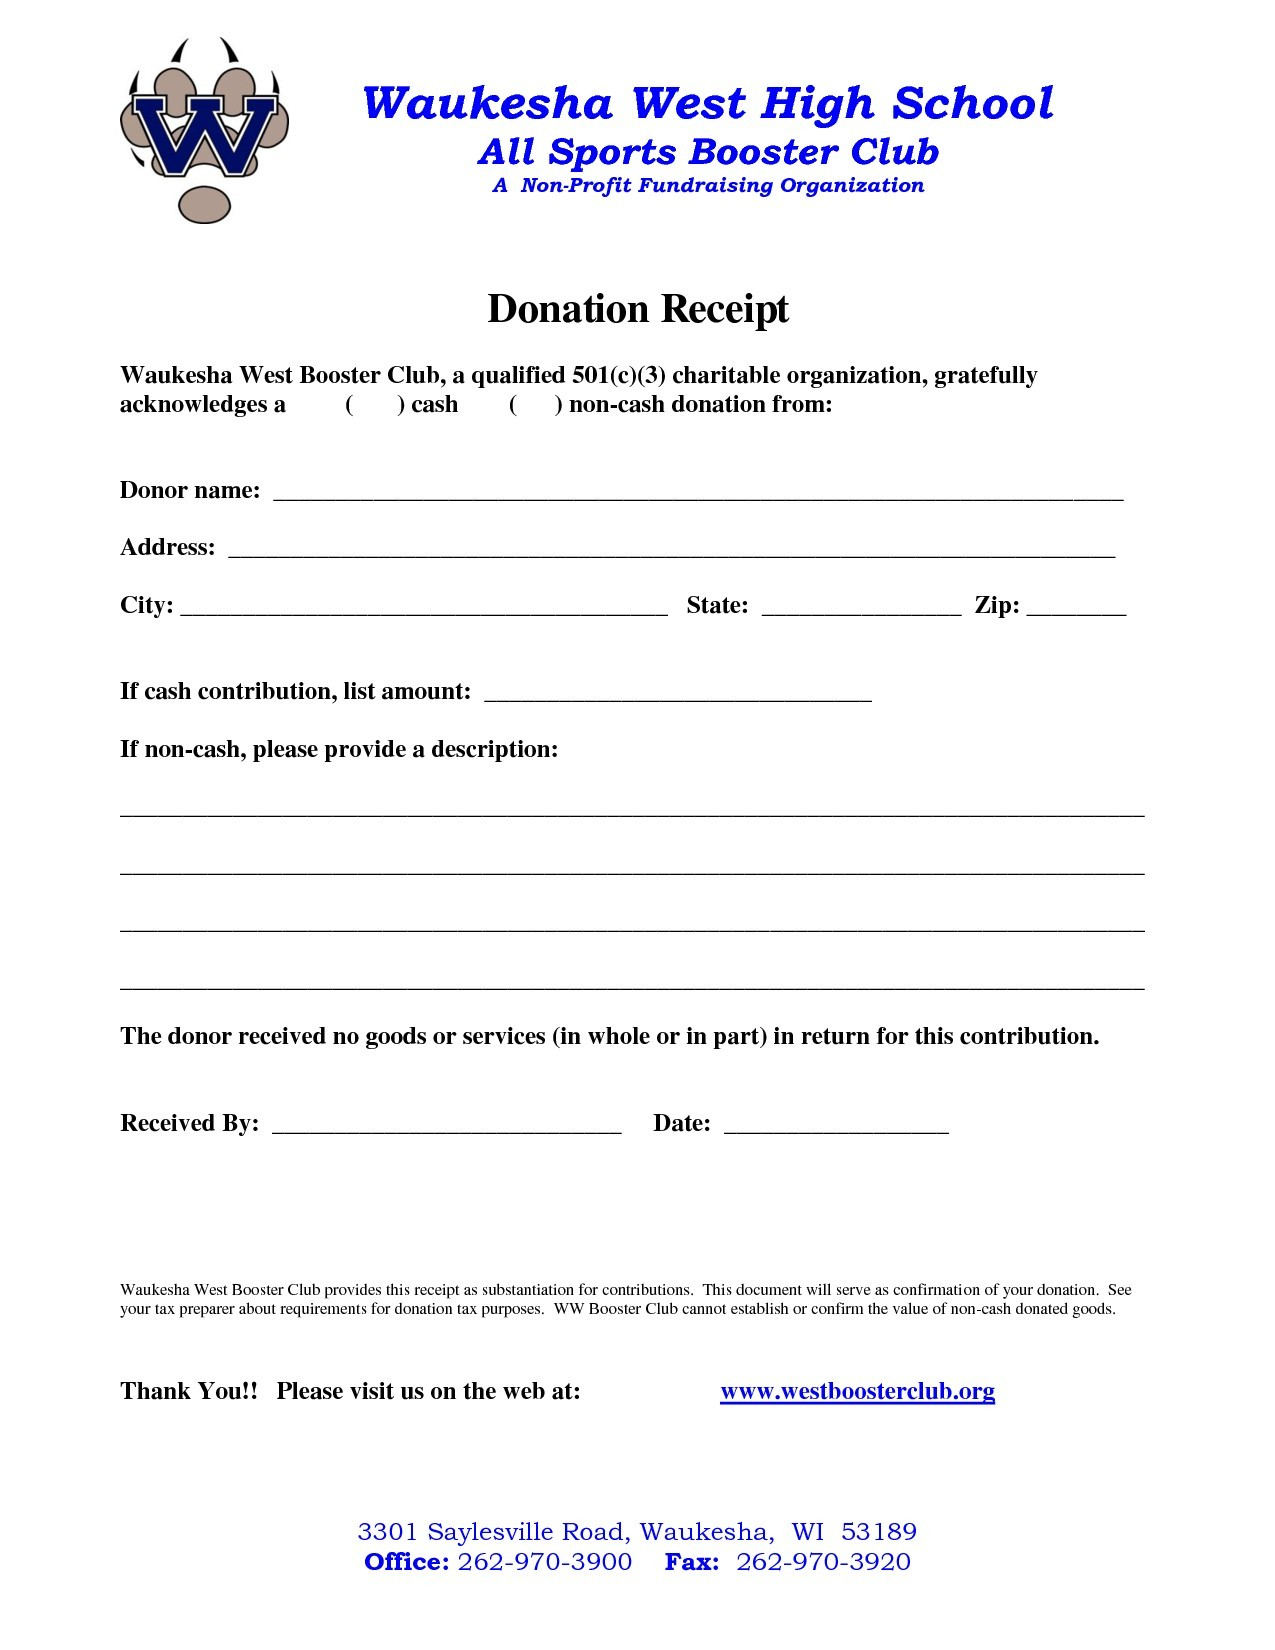 Donation Receipt Letter Template - Donation Receipt Template New Awesome Non Profit Donation Receipt